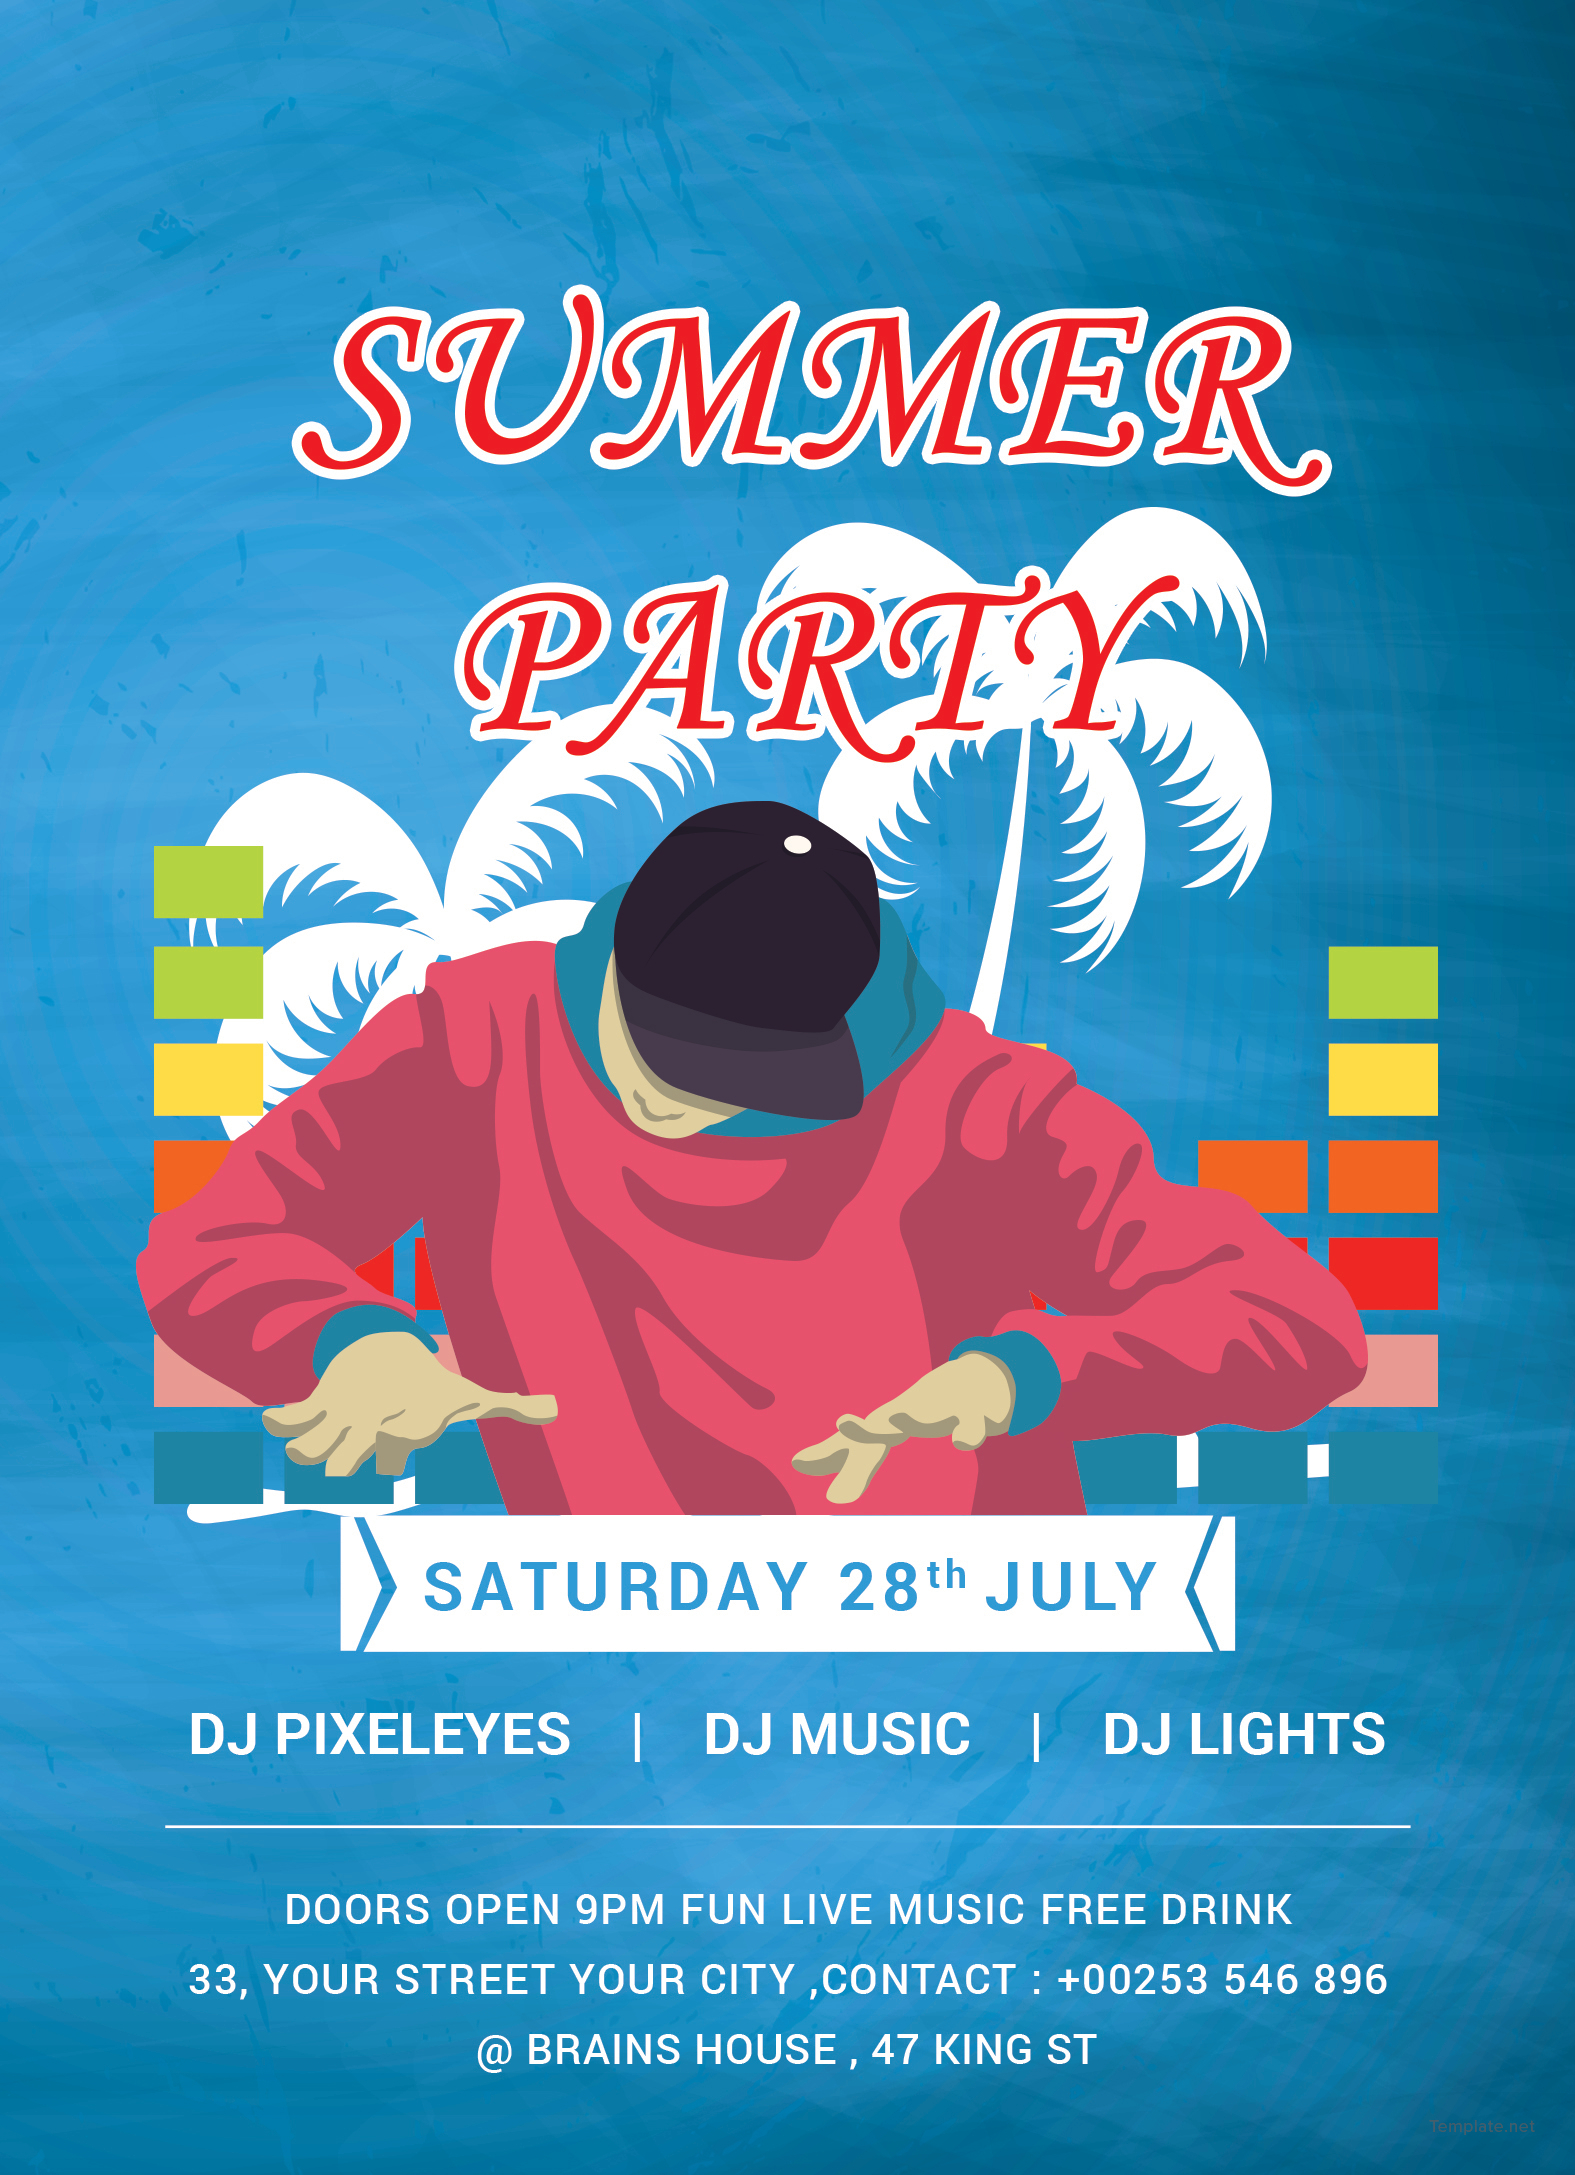 Free DJ Summer Party Invitation Template In Adobe Photoshop Illustrator Template